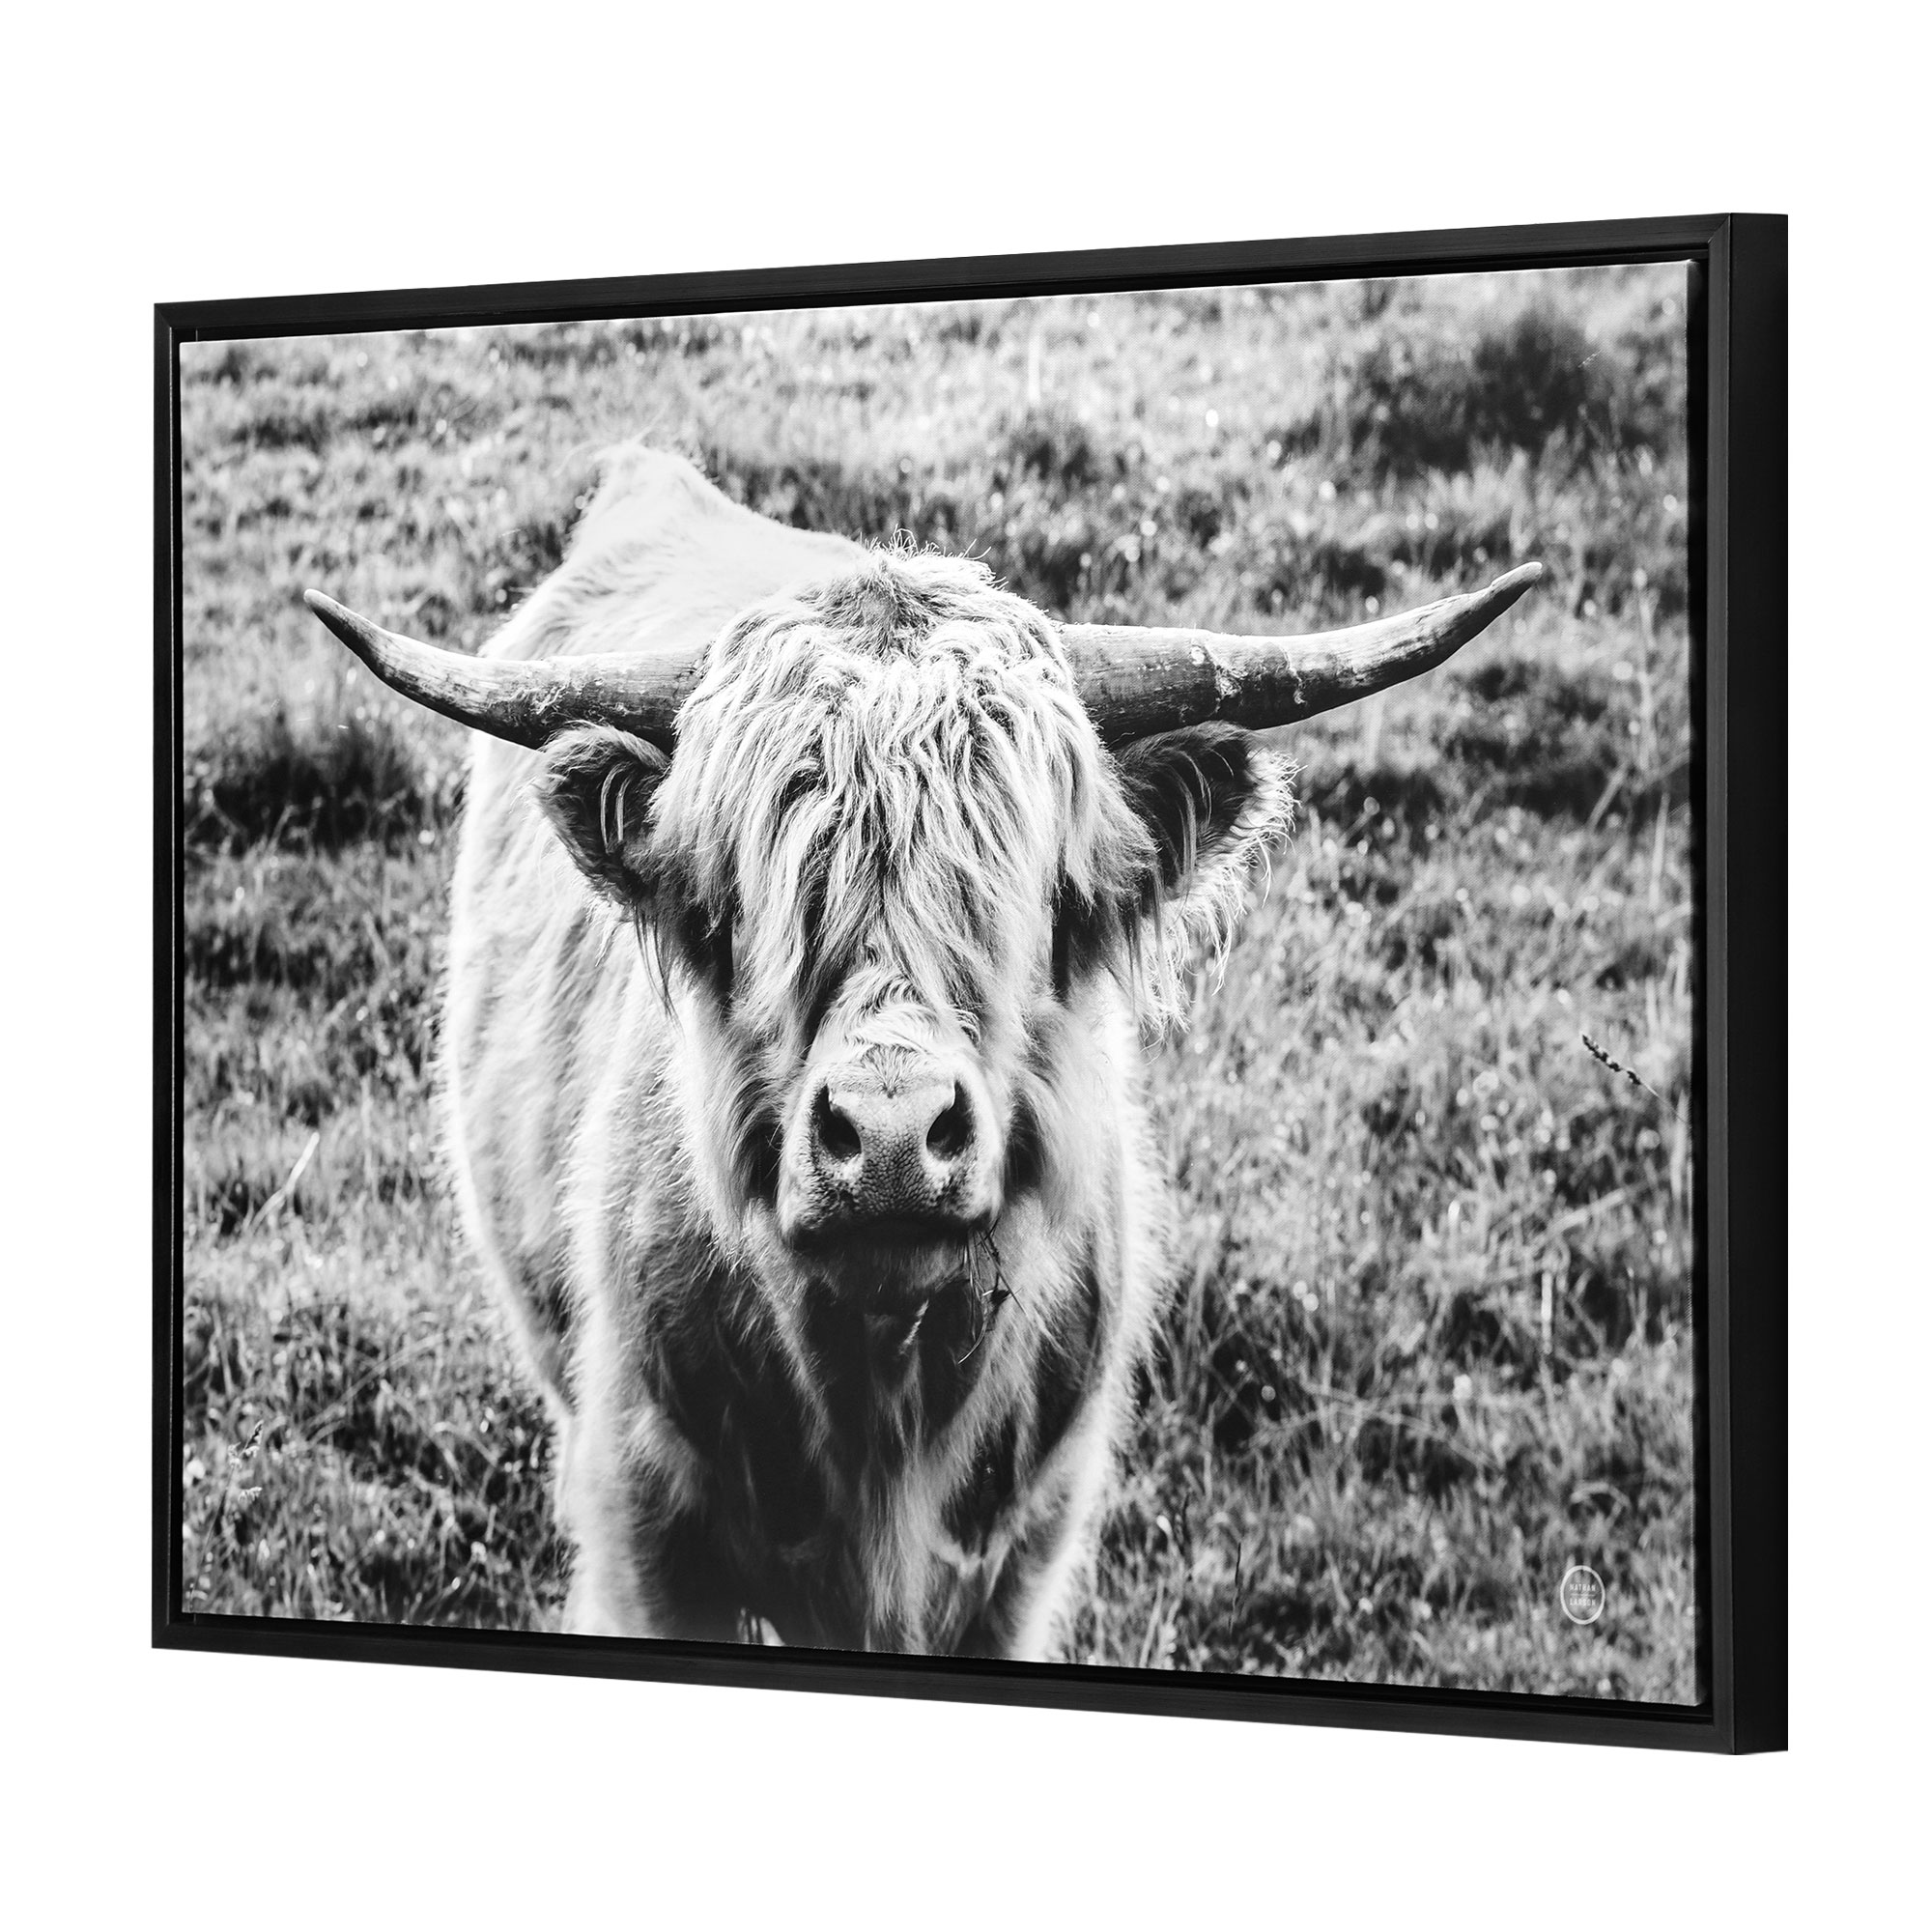 Crystal Art Gallery Highland Cow Framed Digital Print Size 36"x24" by Wild Apple